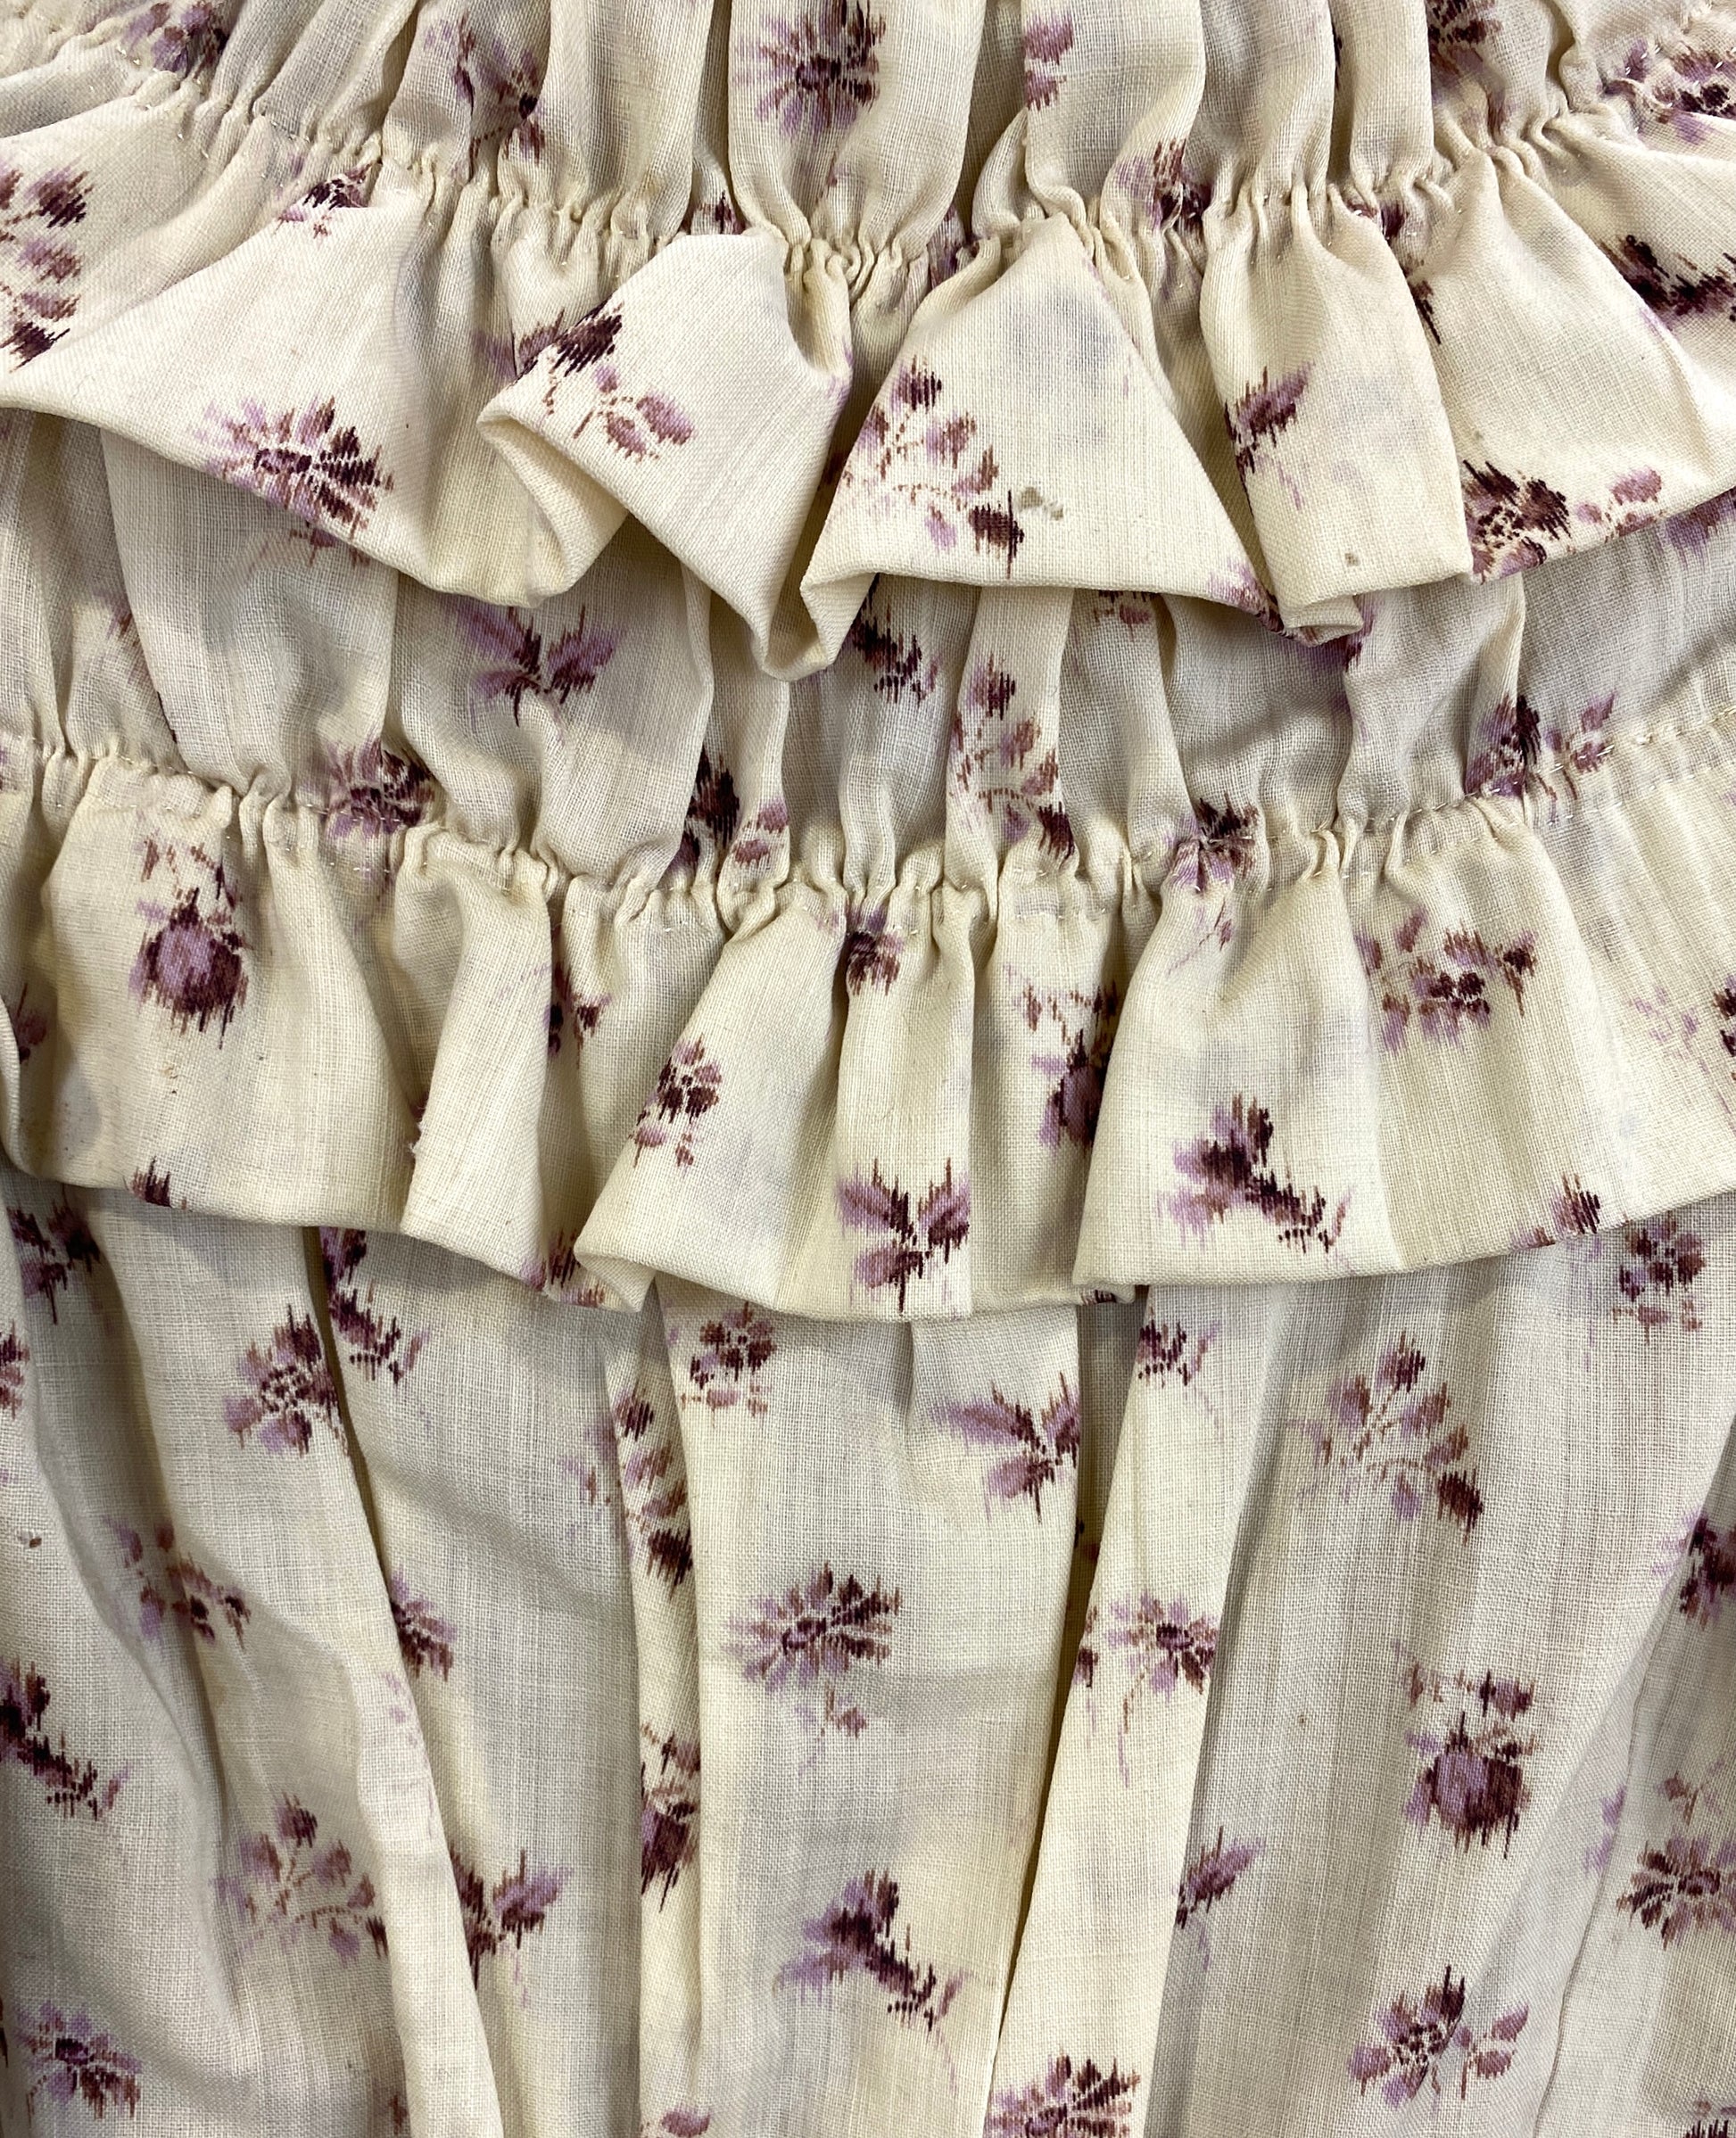 Back ruffles of Antique Victorian Cream & Lavender Floral Bodice